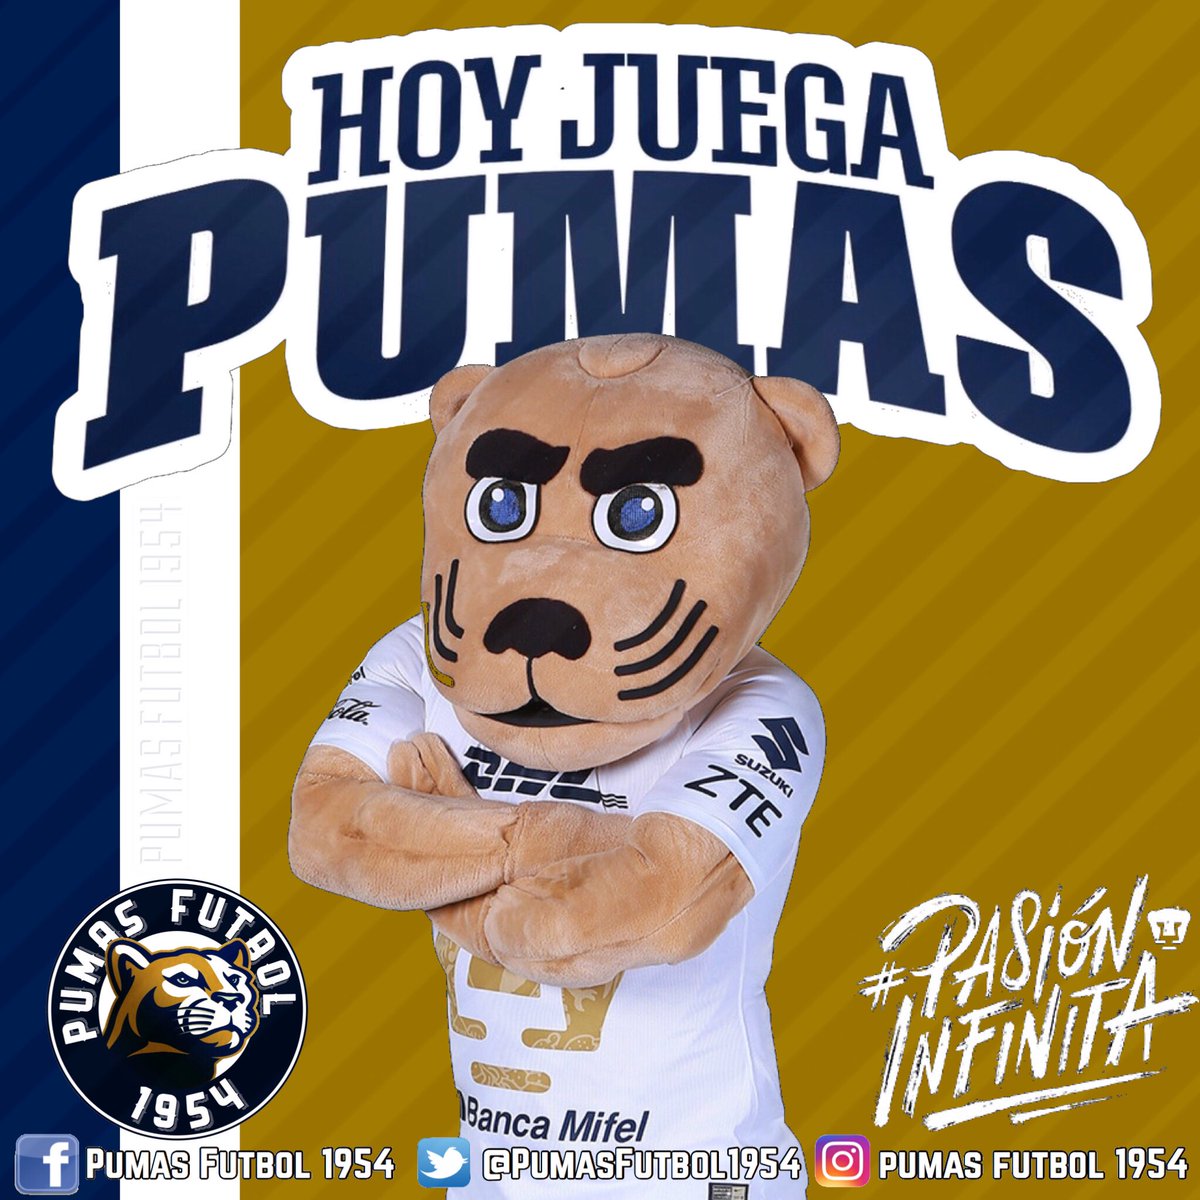 Pumas Futbol 1954 on Twitter: JUEGA ⚽️PUMAS Vs Monarcas 🏟Estadio Olímpico Universitario ⏱12:00 hrs Canal 2 #SoyDePumas #PumasFutbol1954 / Twitter